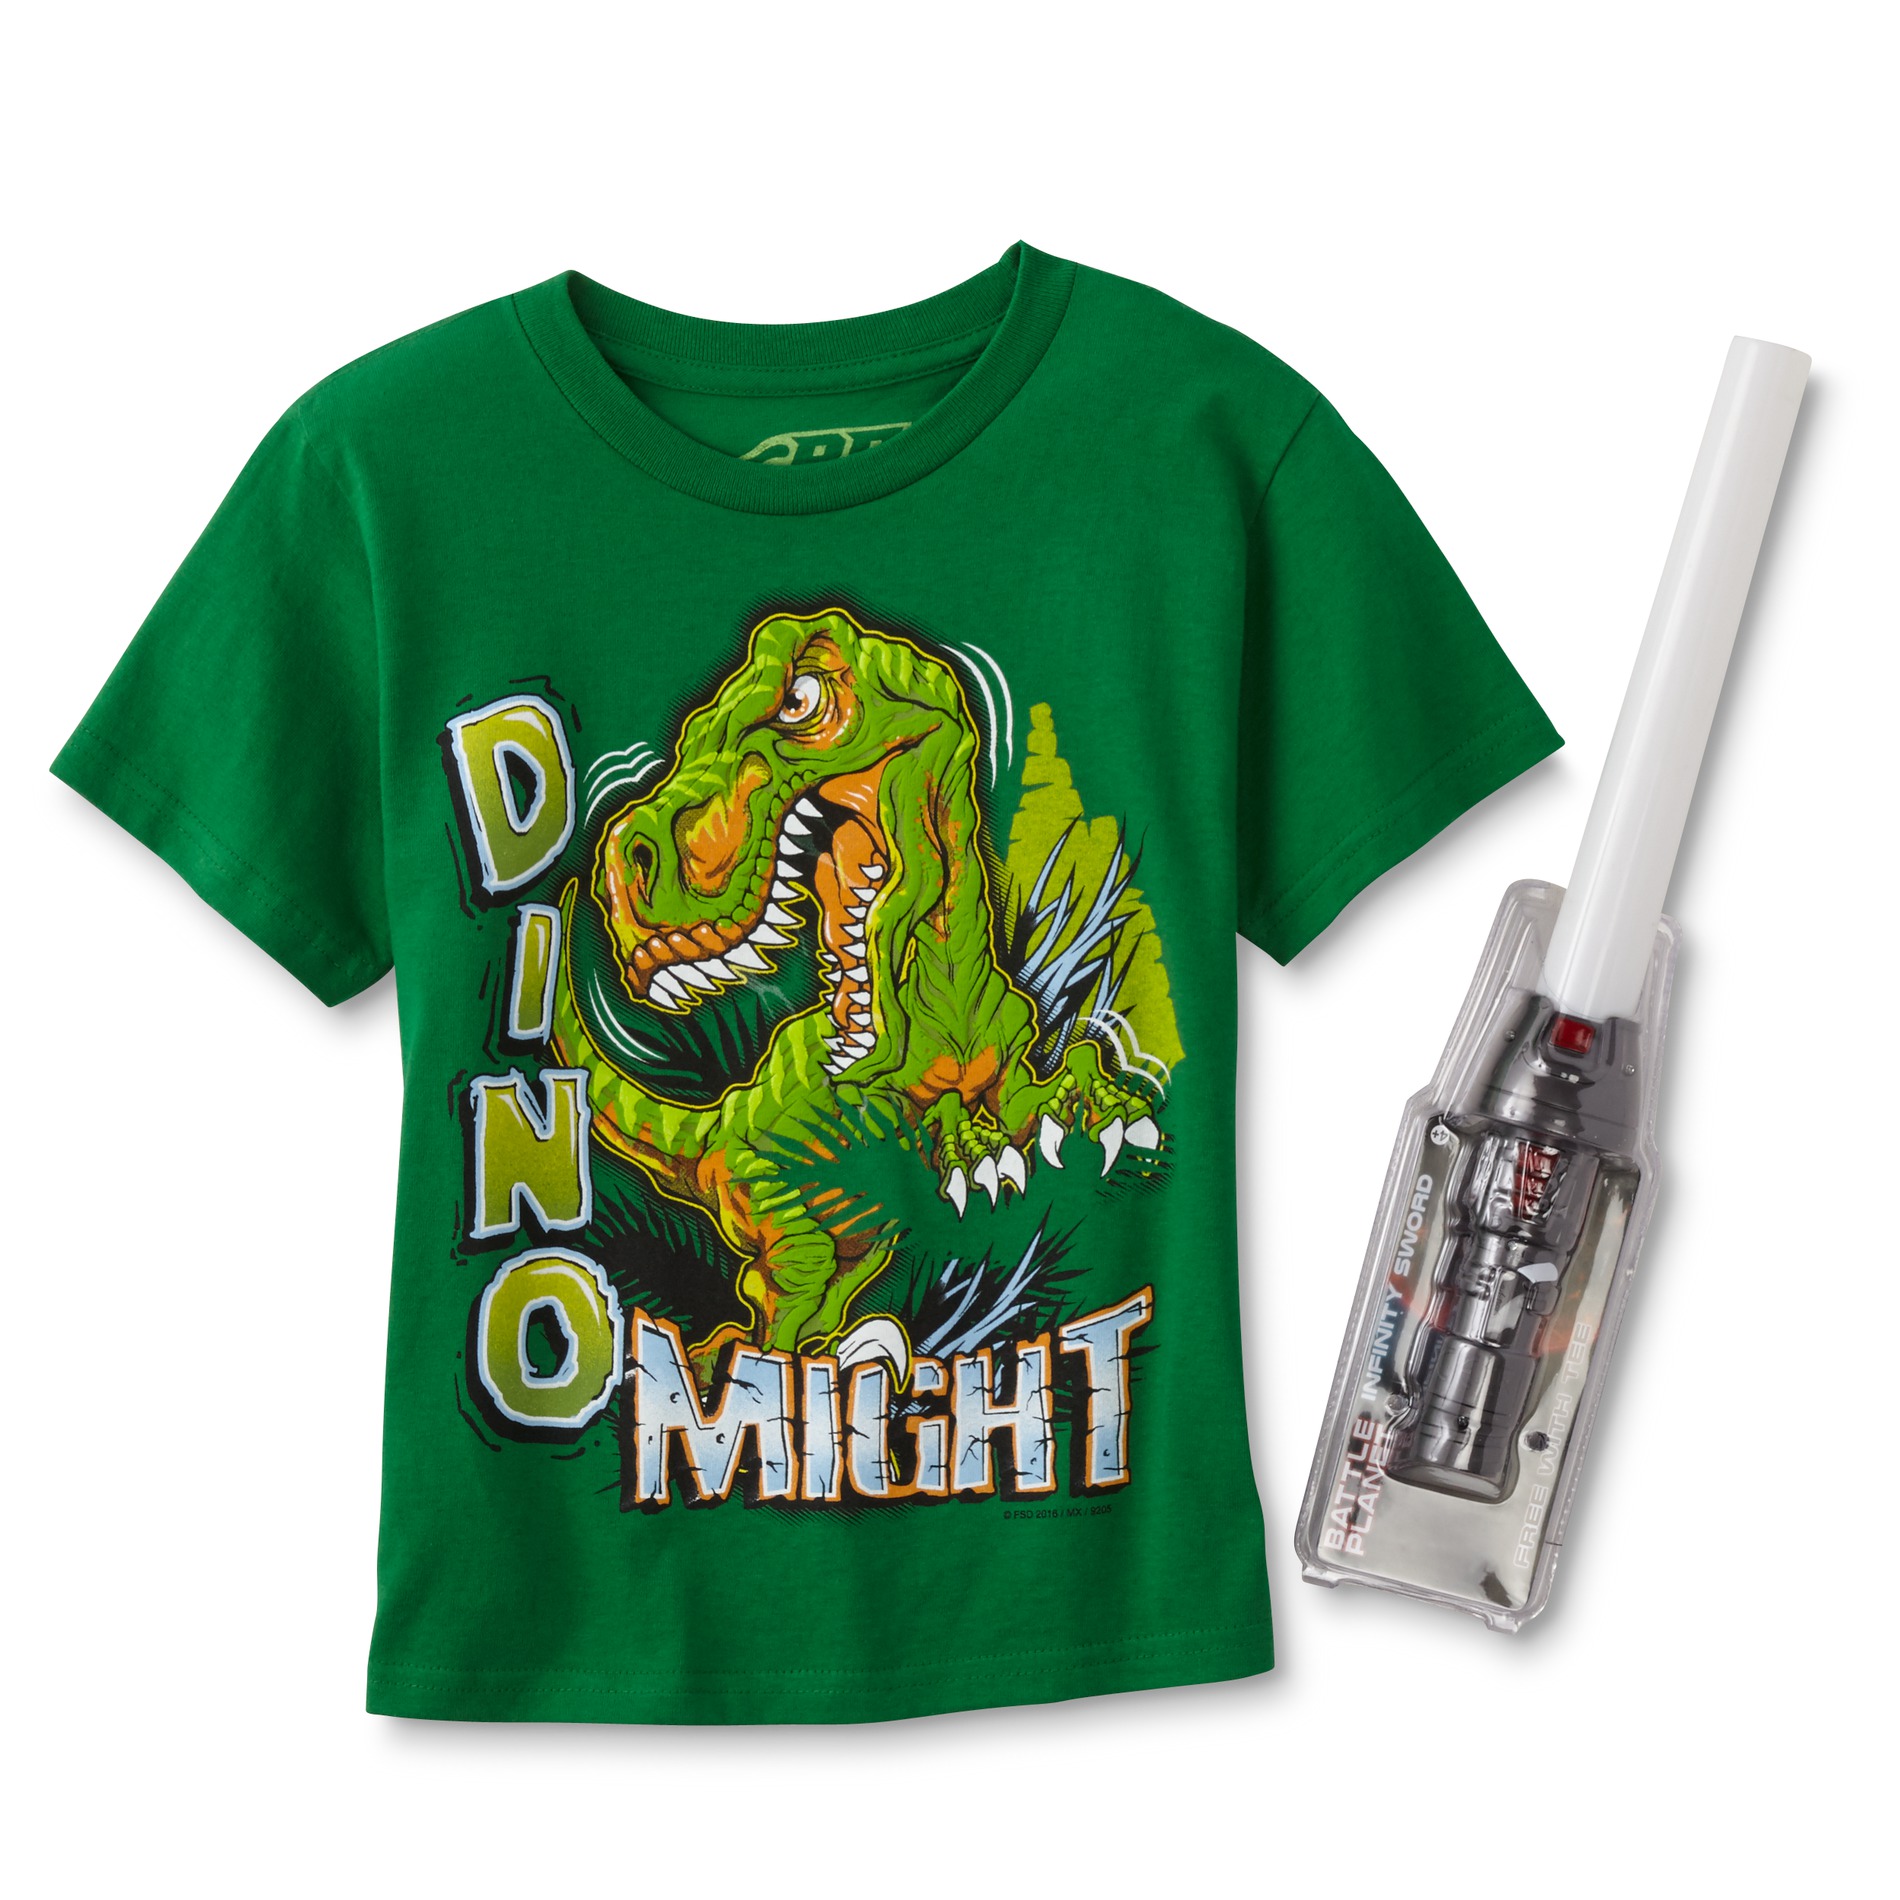 Rudeboyz Boys' Graphic T-Shirt & Infinity Sword Toy - Dinosaur